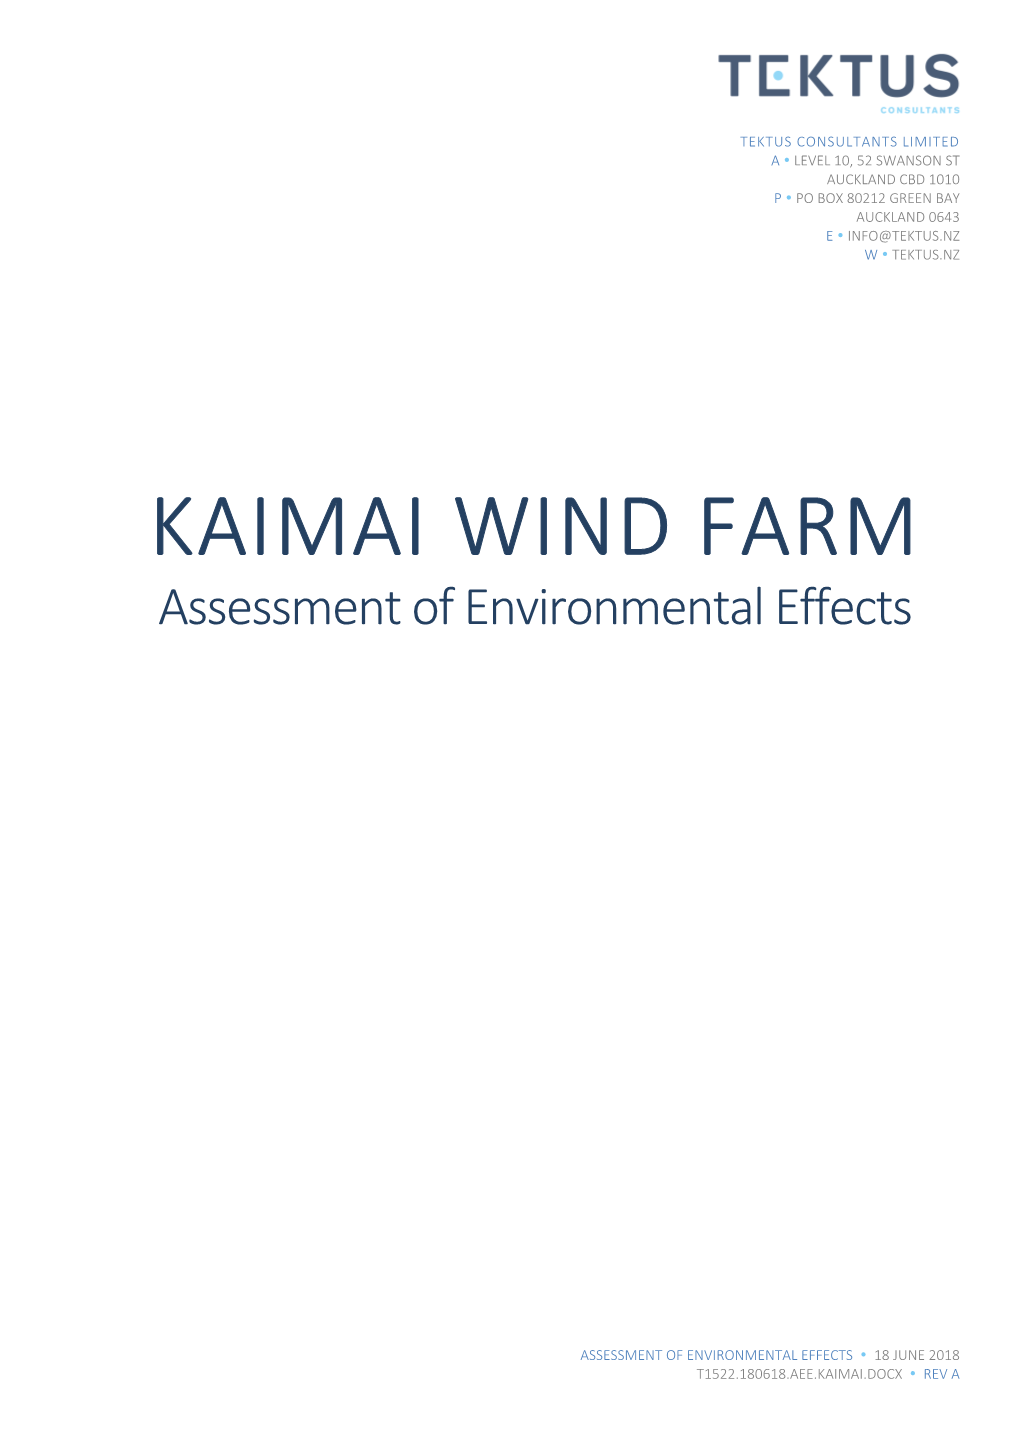 KAIMAI WIND FARM Assessment of Environmental Effects